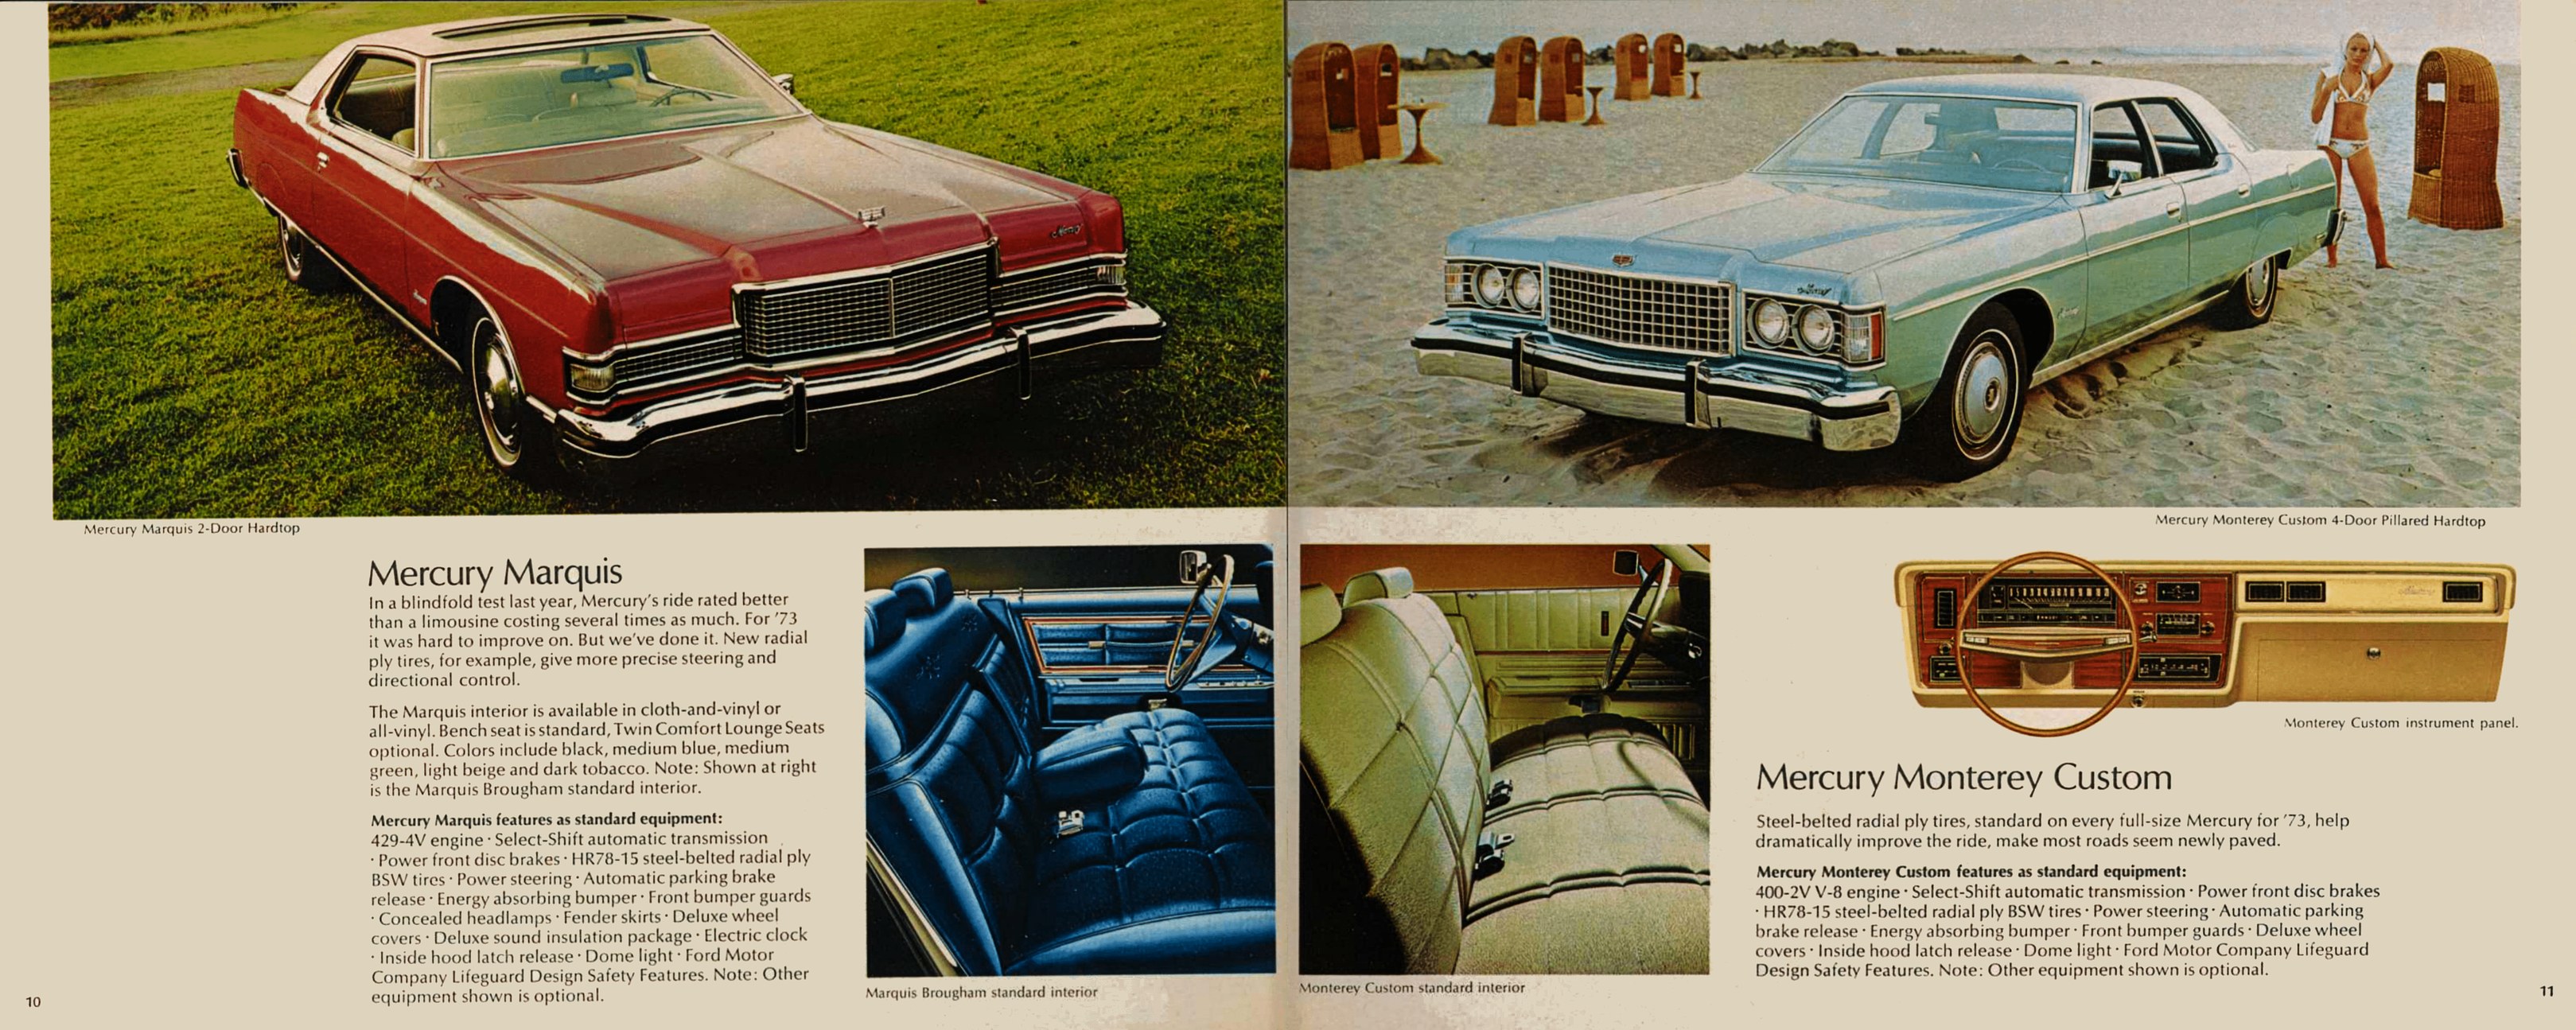 1973 Lincoln Mercury Full Line Brochure 10-11